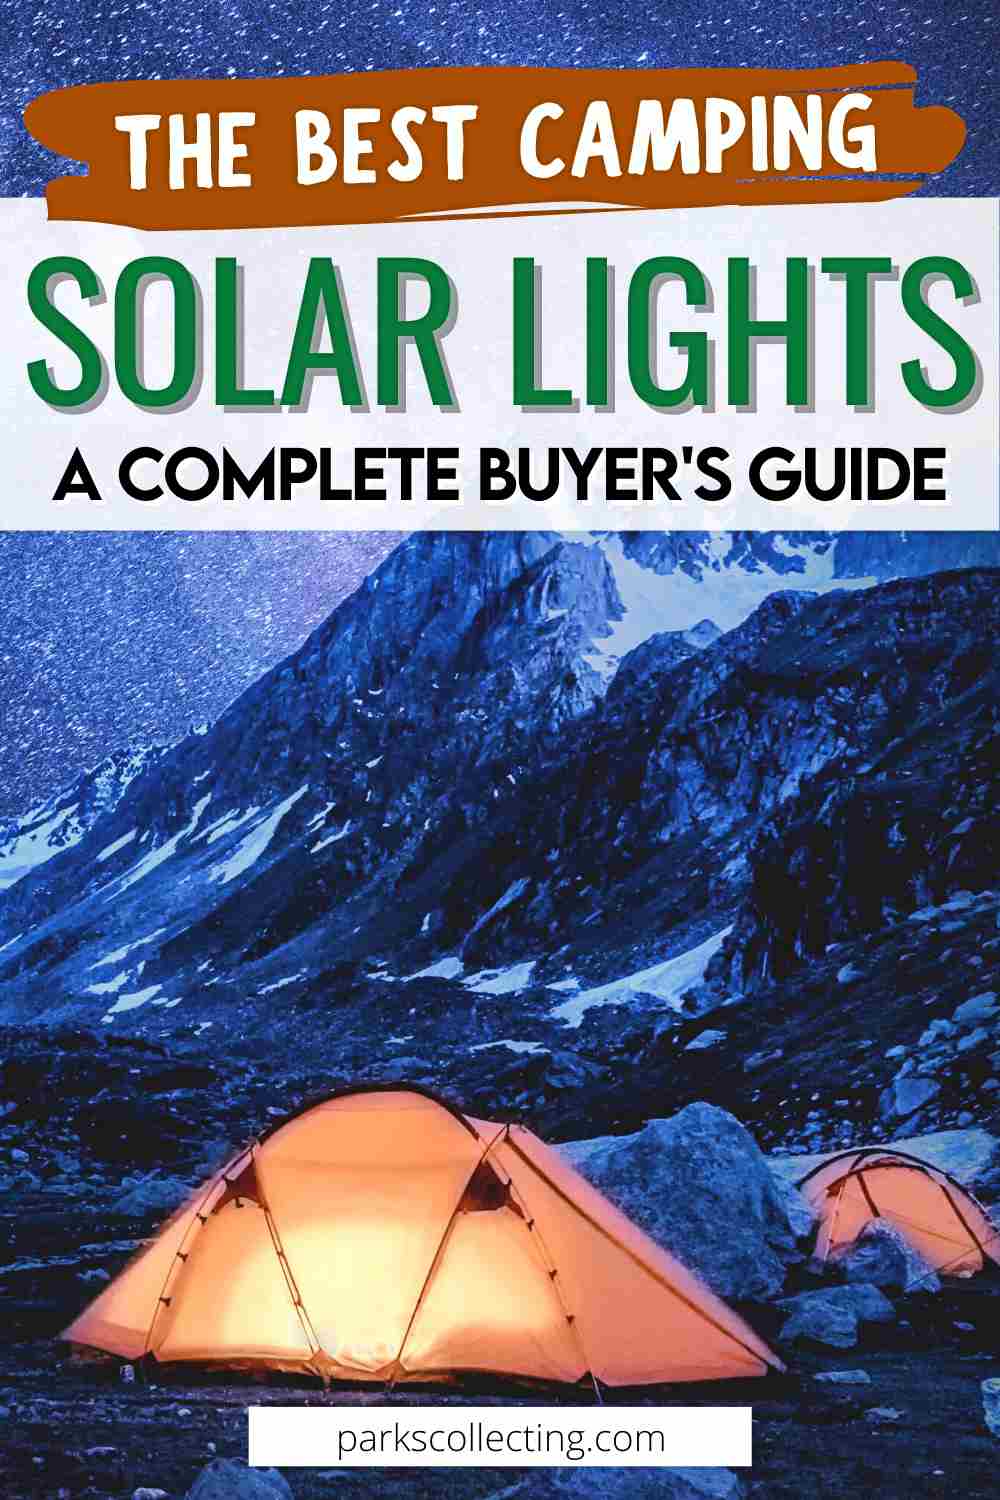 https://parkscollecting.com/wp-content/uploads/Best-camping-solar-lights-3.jpg